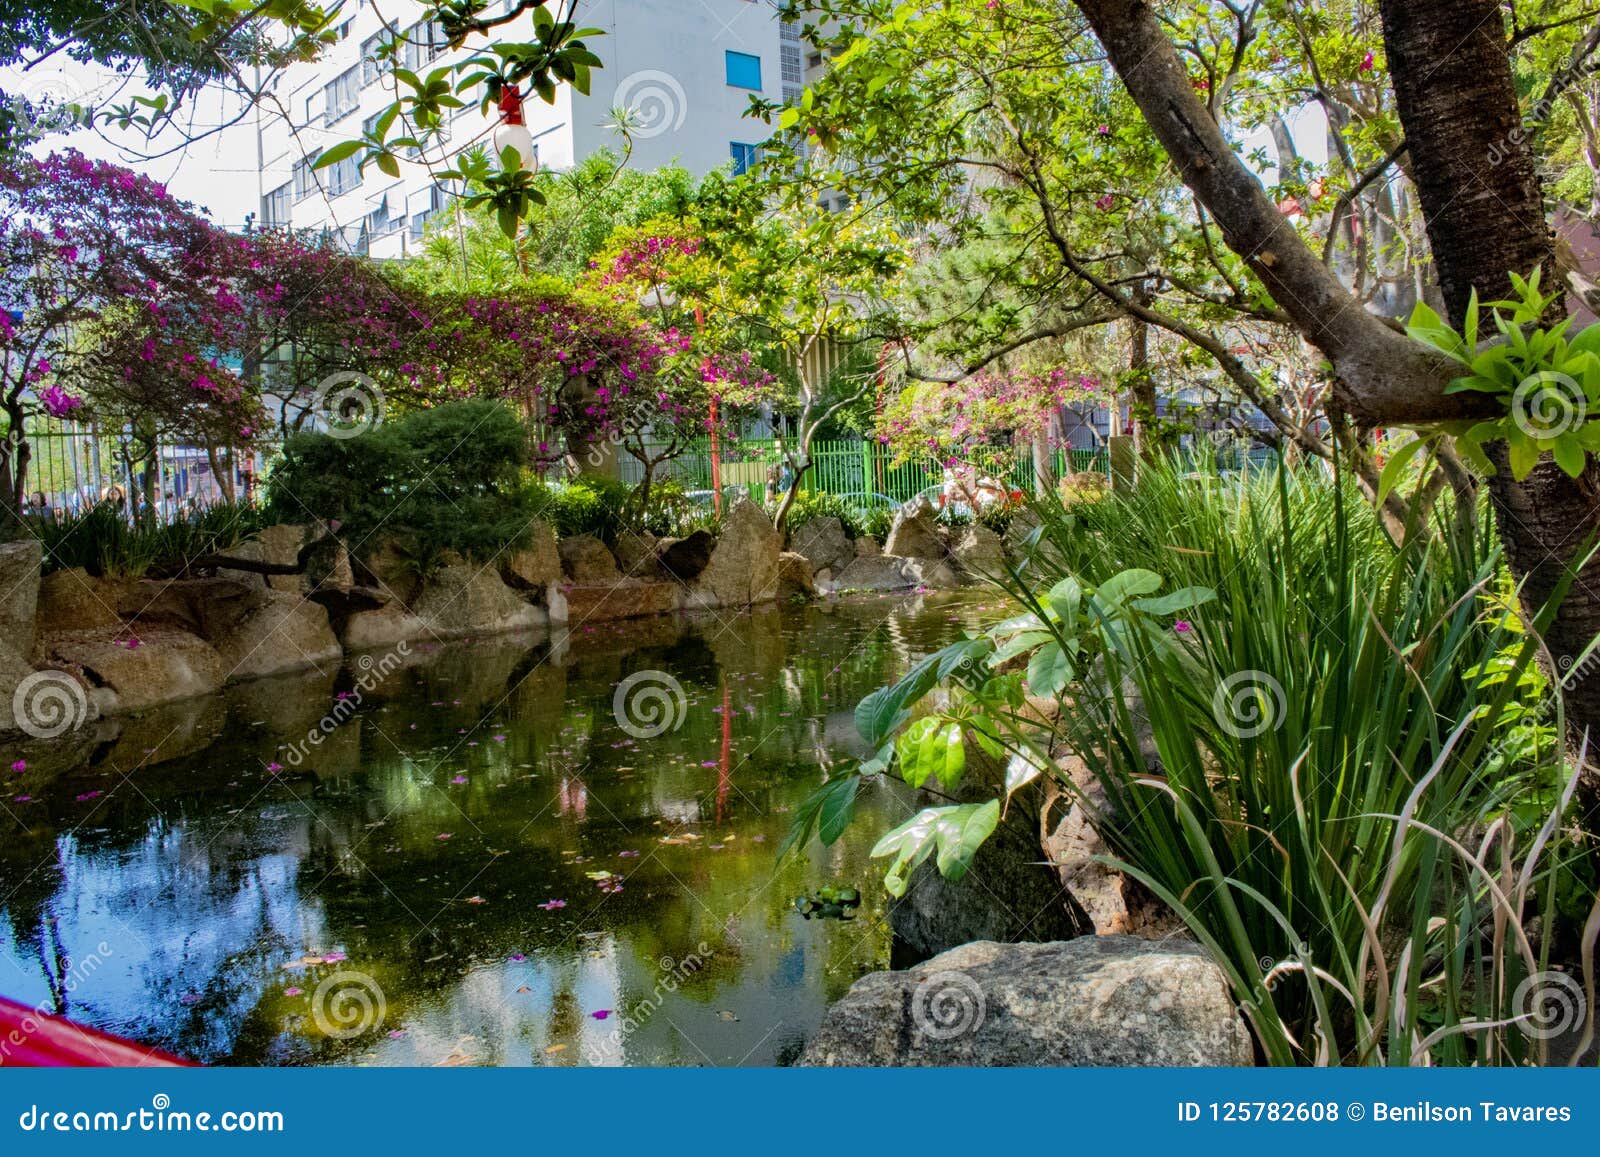 oriental pond in japanese neighborhood freedom garden